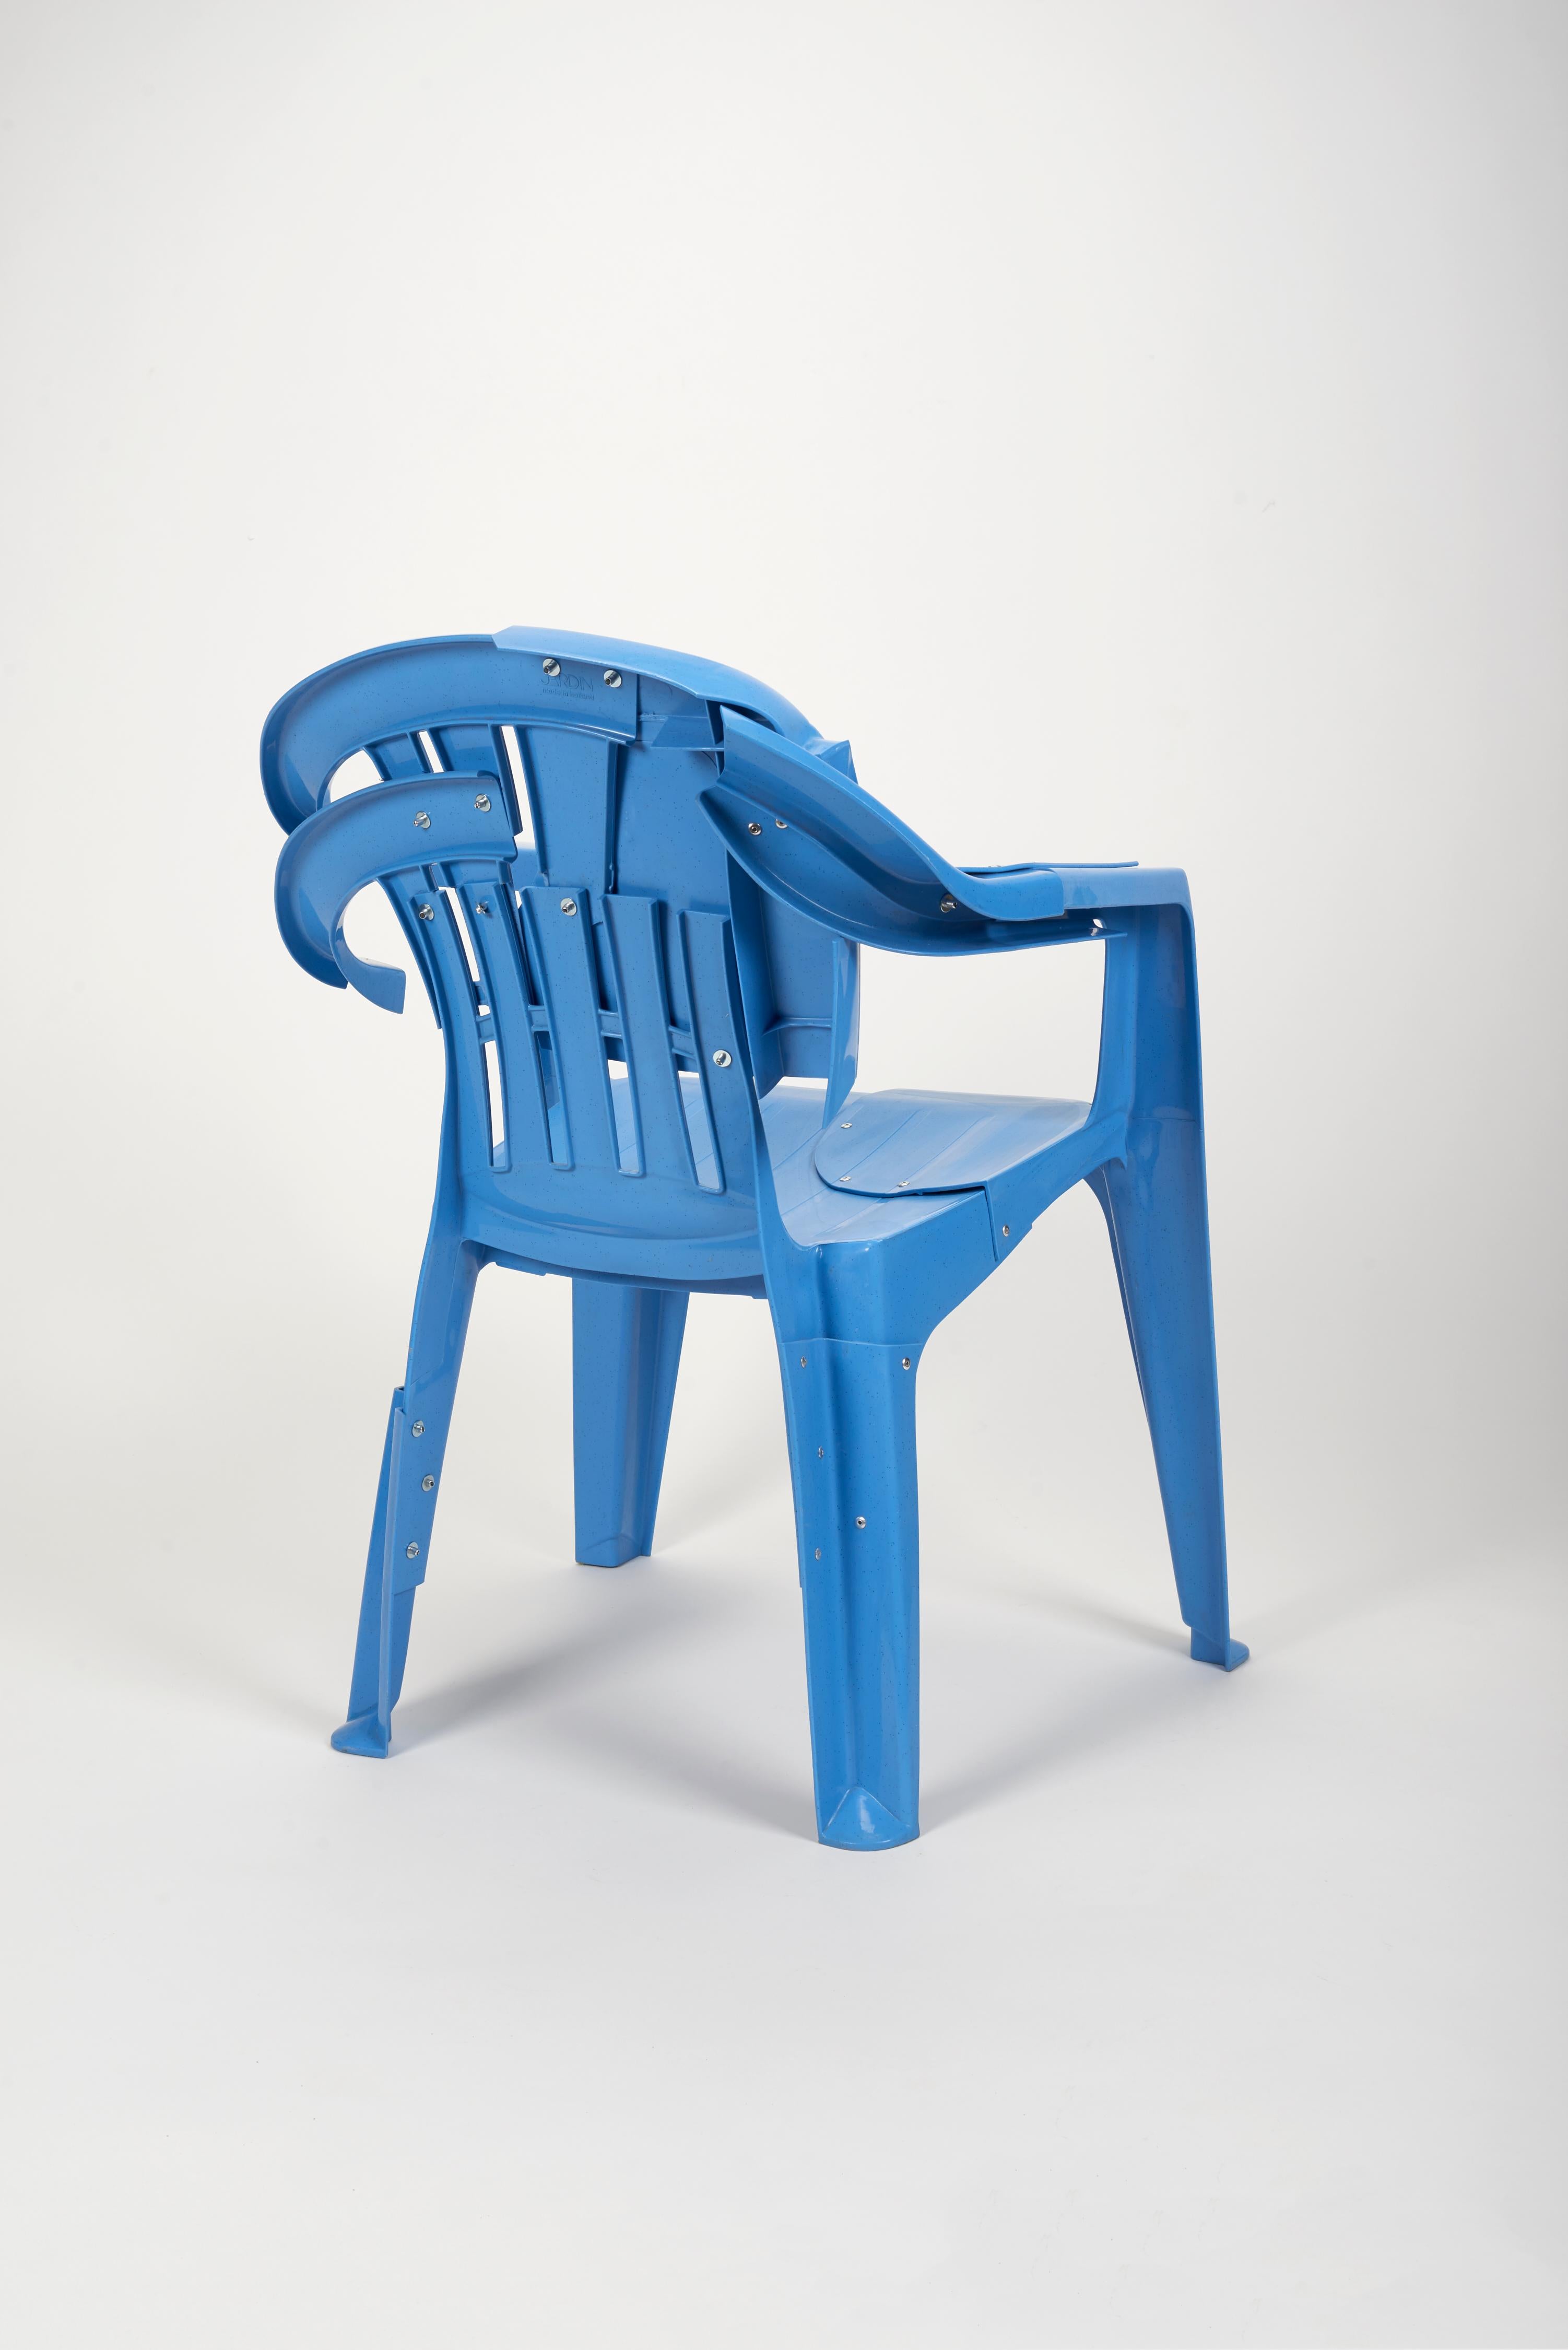 Contemporary Blue Room Armchair, Pierre Castignola, Plastic Chair